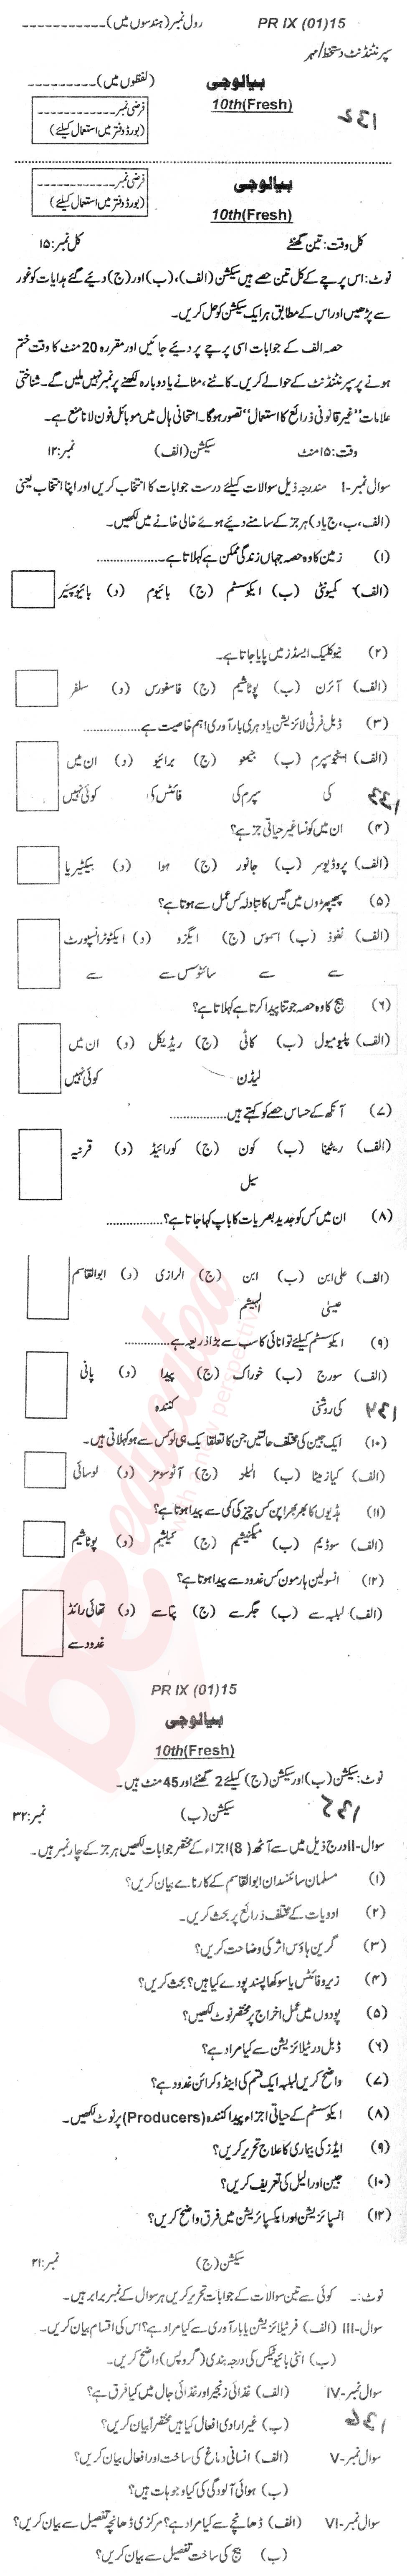 Biology 10th Urdu Medium Past Paper Group 1 BISE Abbottabad 2015